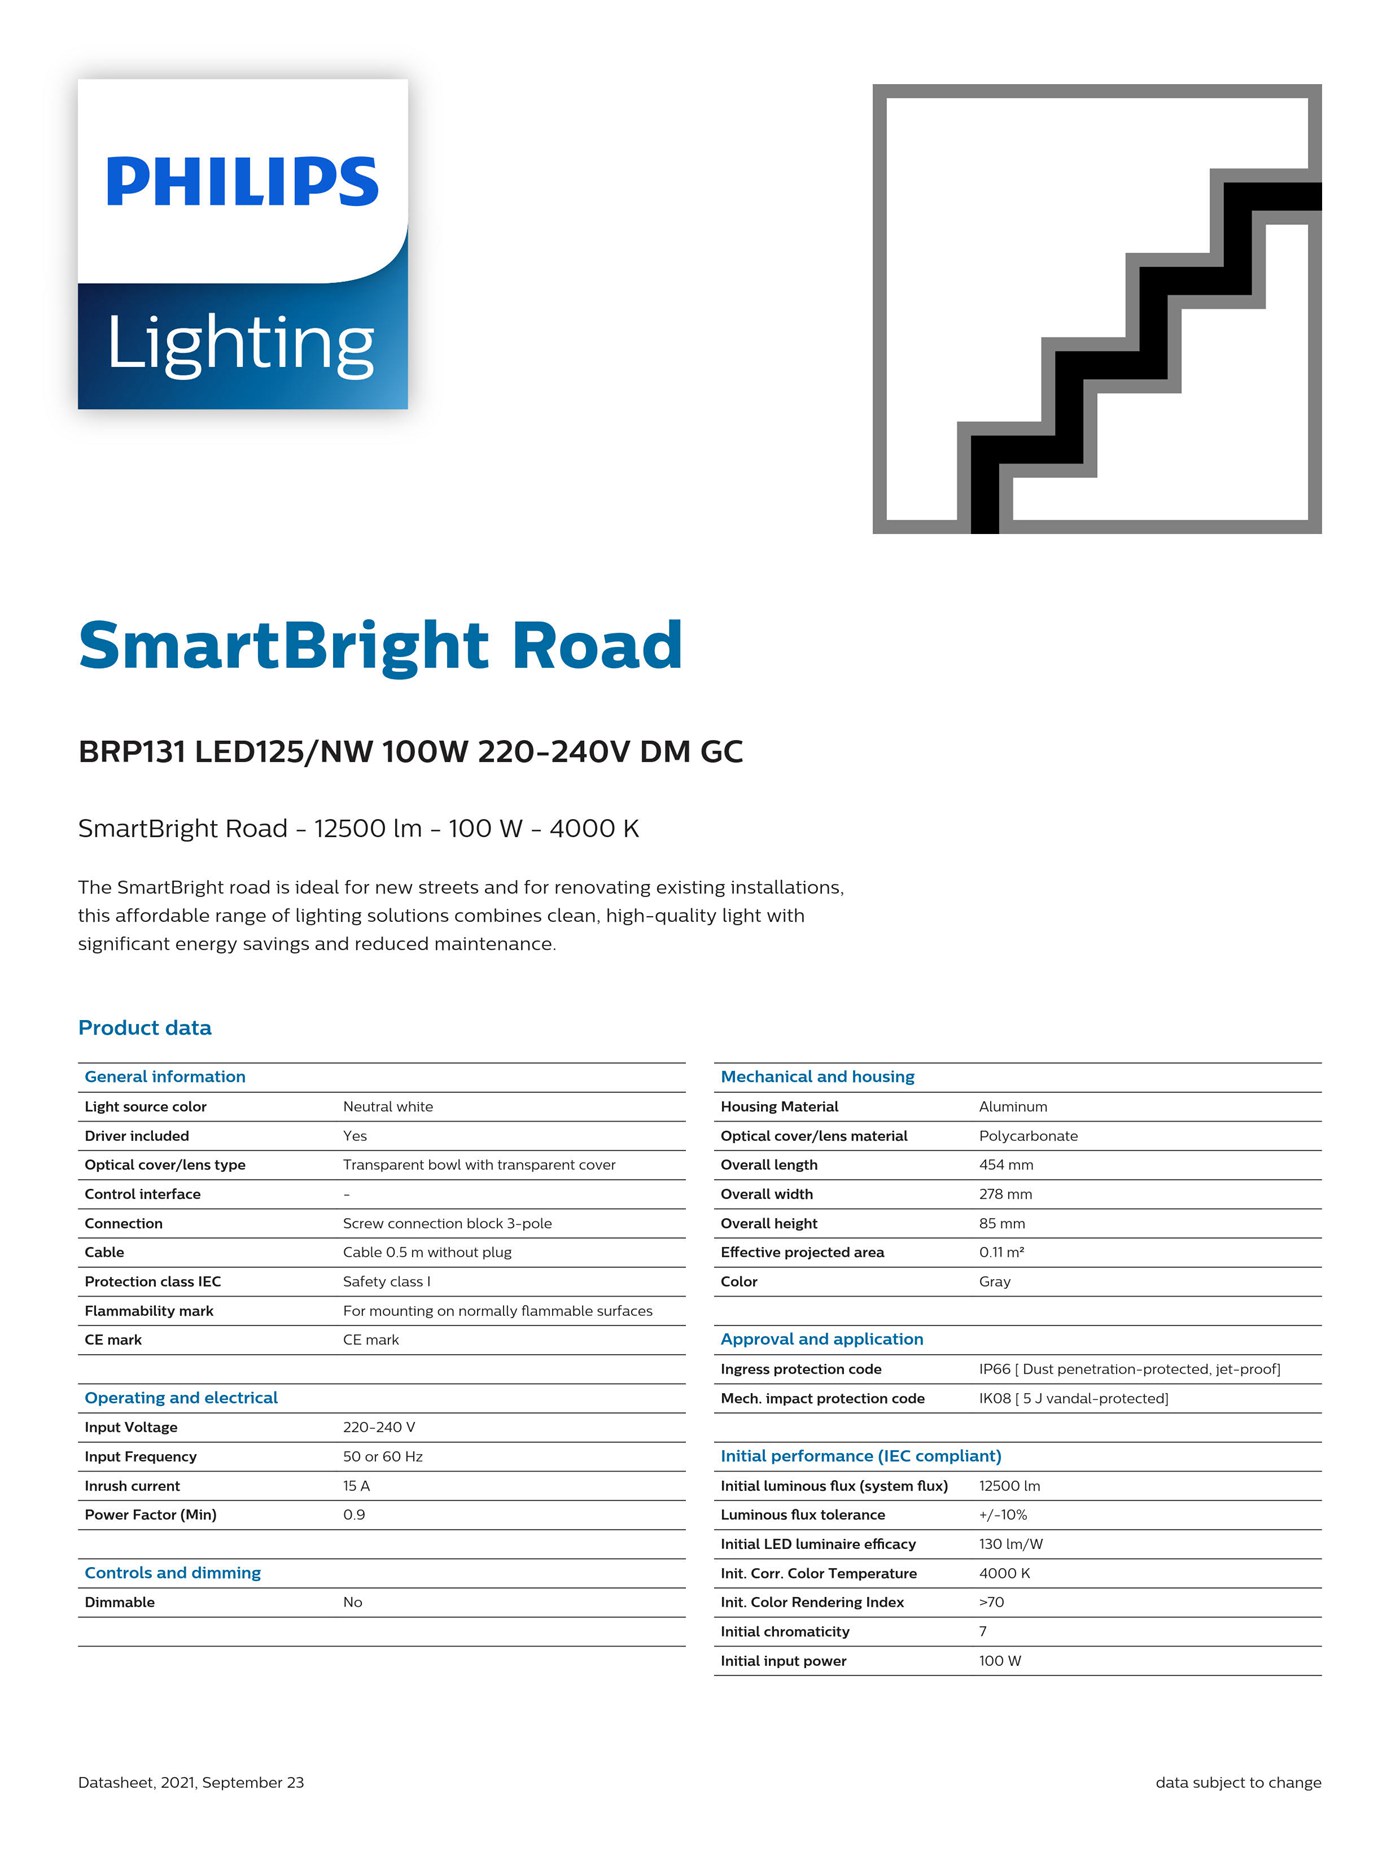 PHILIPS SmartBright Road BRP131 LED125/NW 100W 220-240V DM GC 911401675407